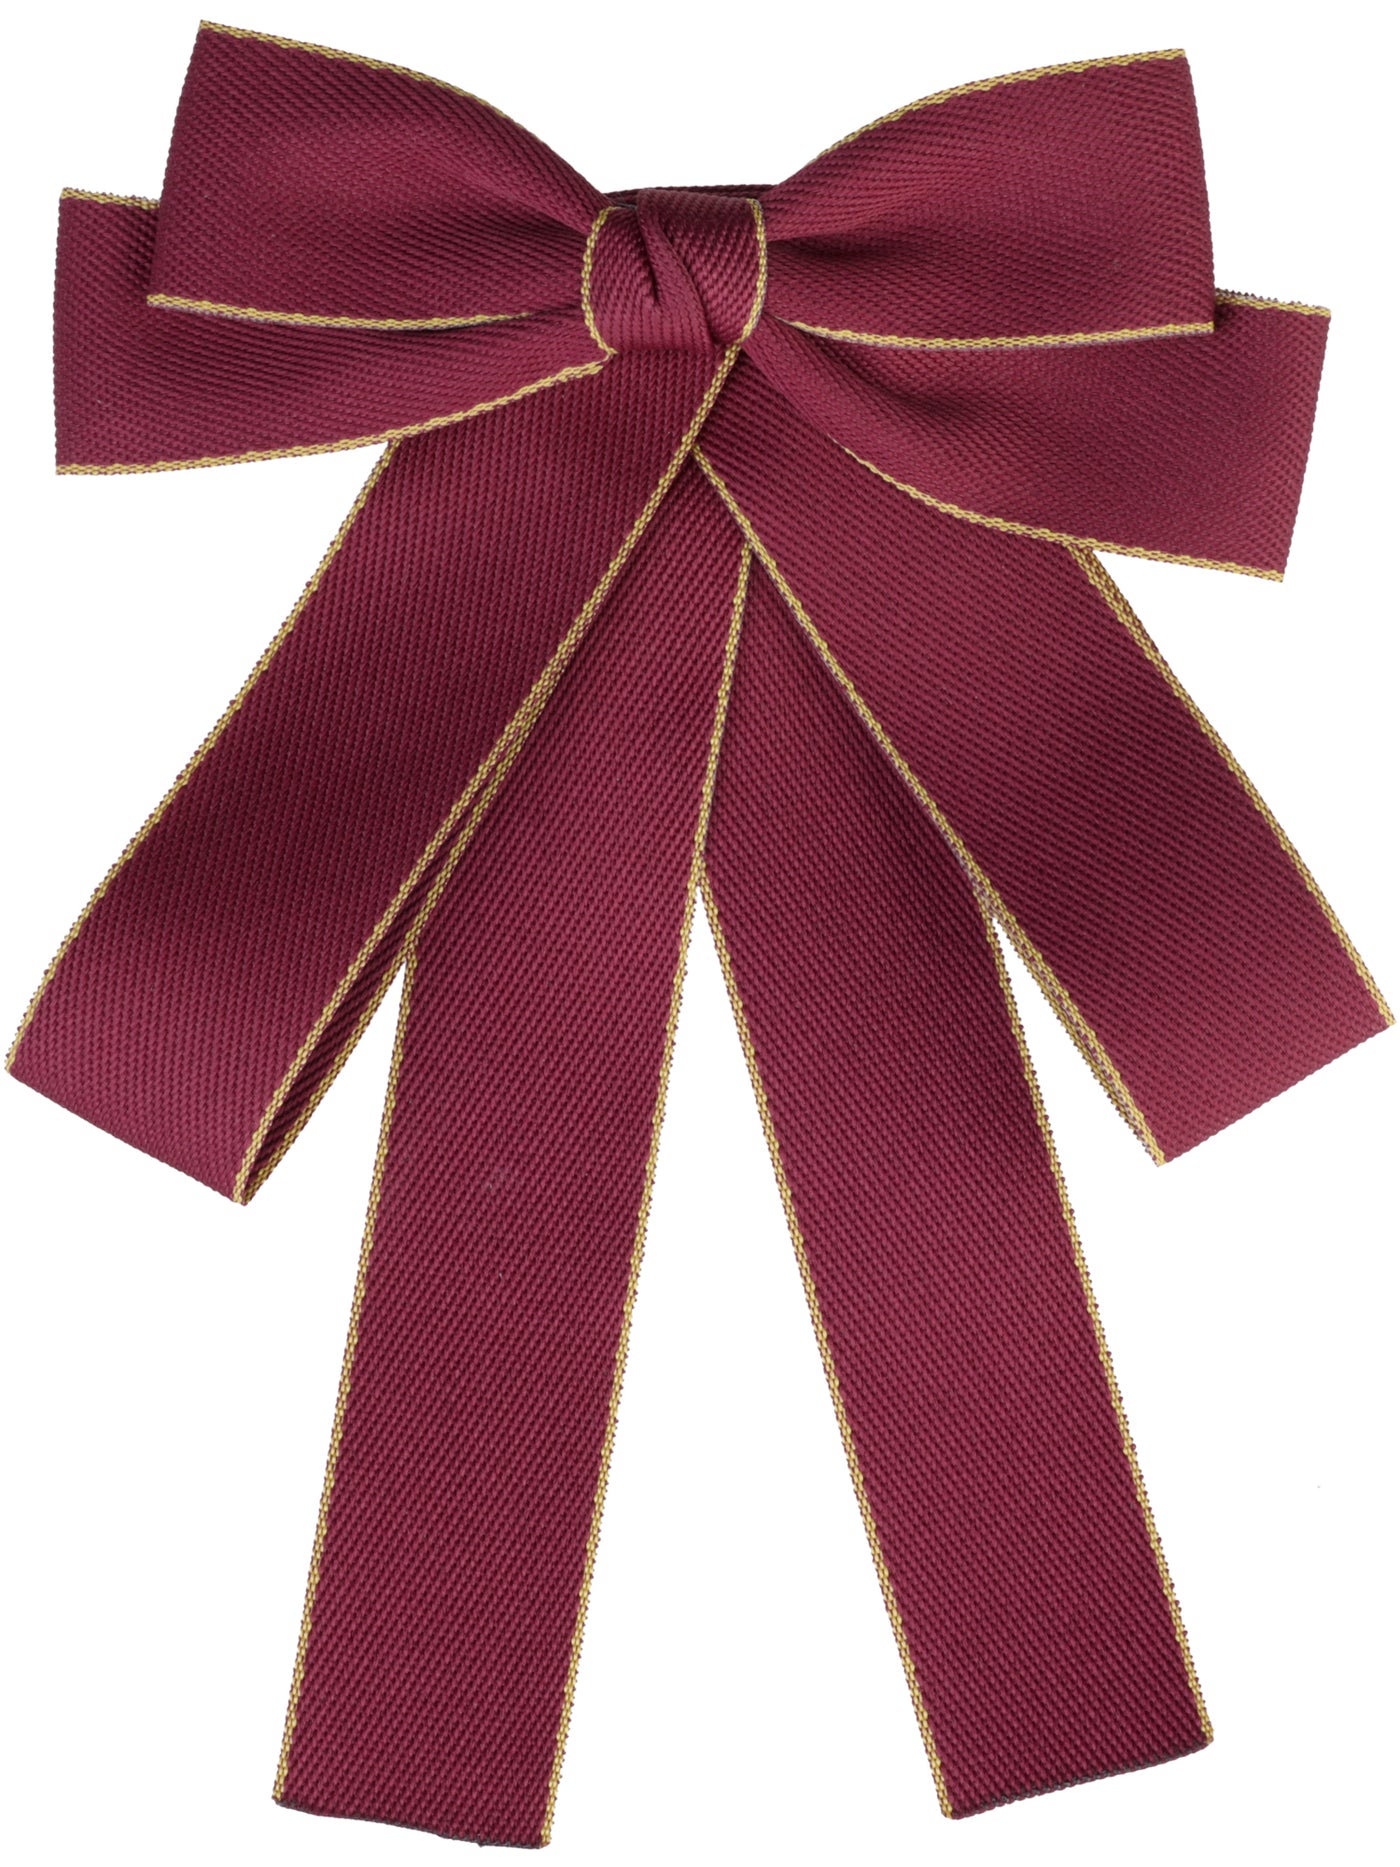 Bublédon Women's Bowknot Pre-Tied Bowties Ribbon Brooch Wedding Party Pin Bow Tie